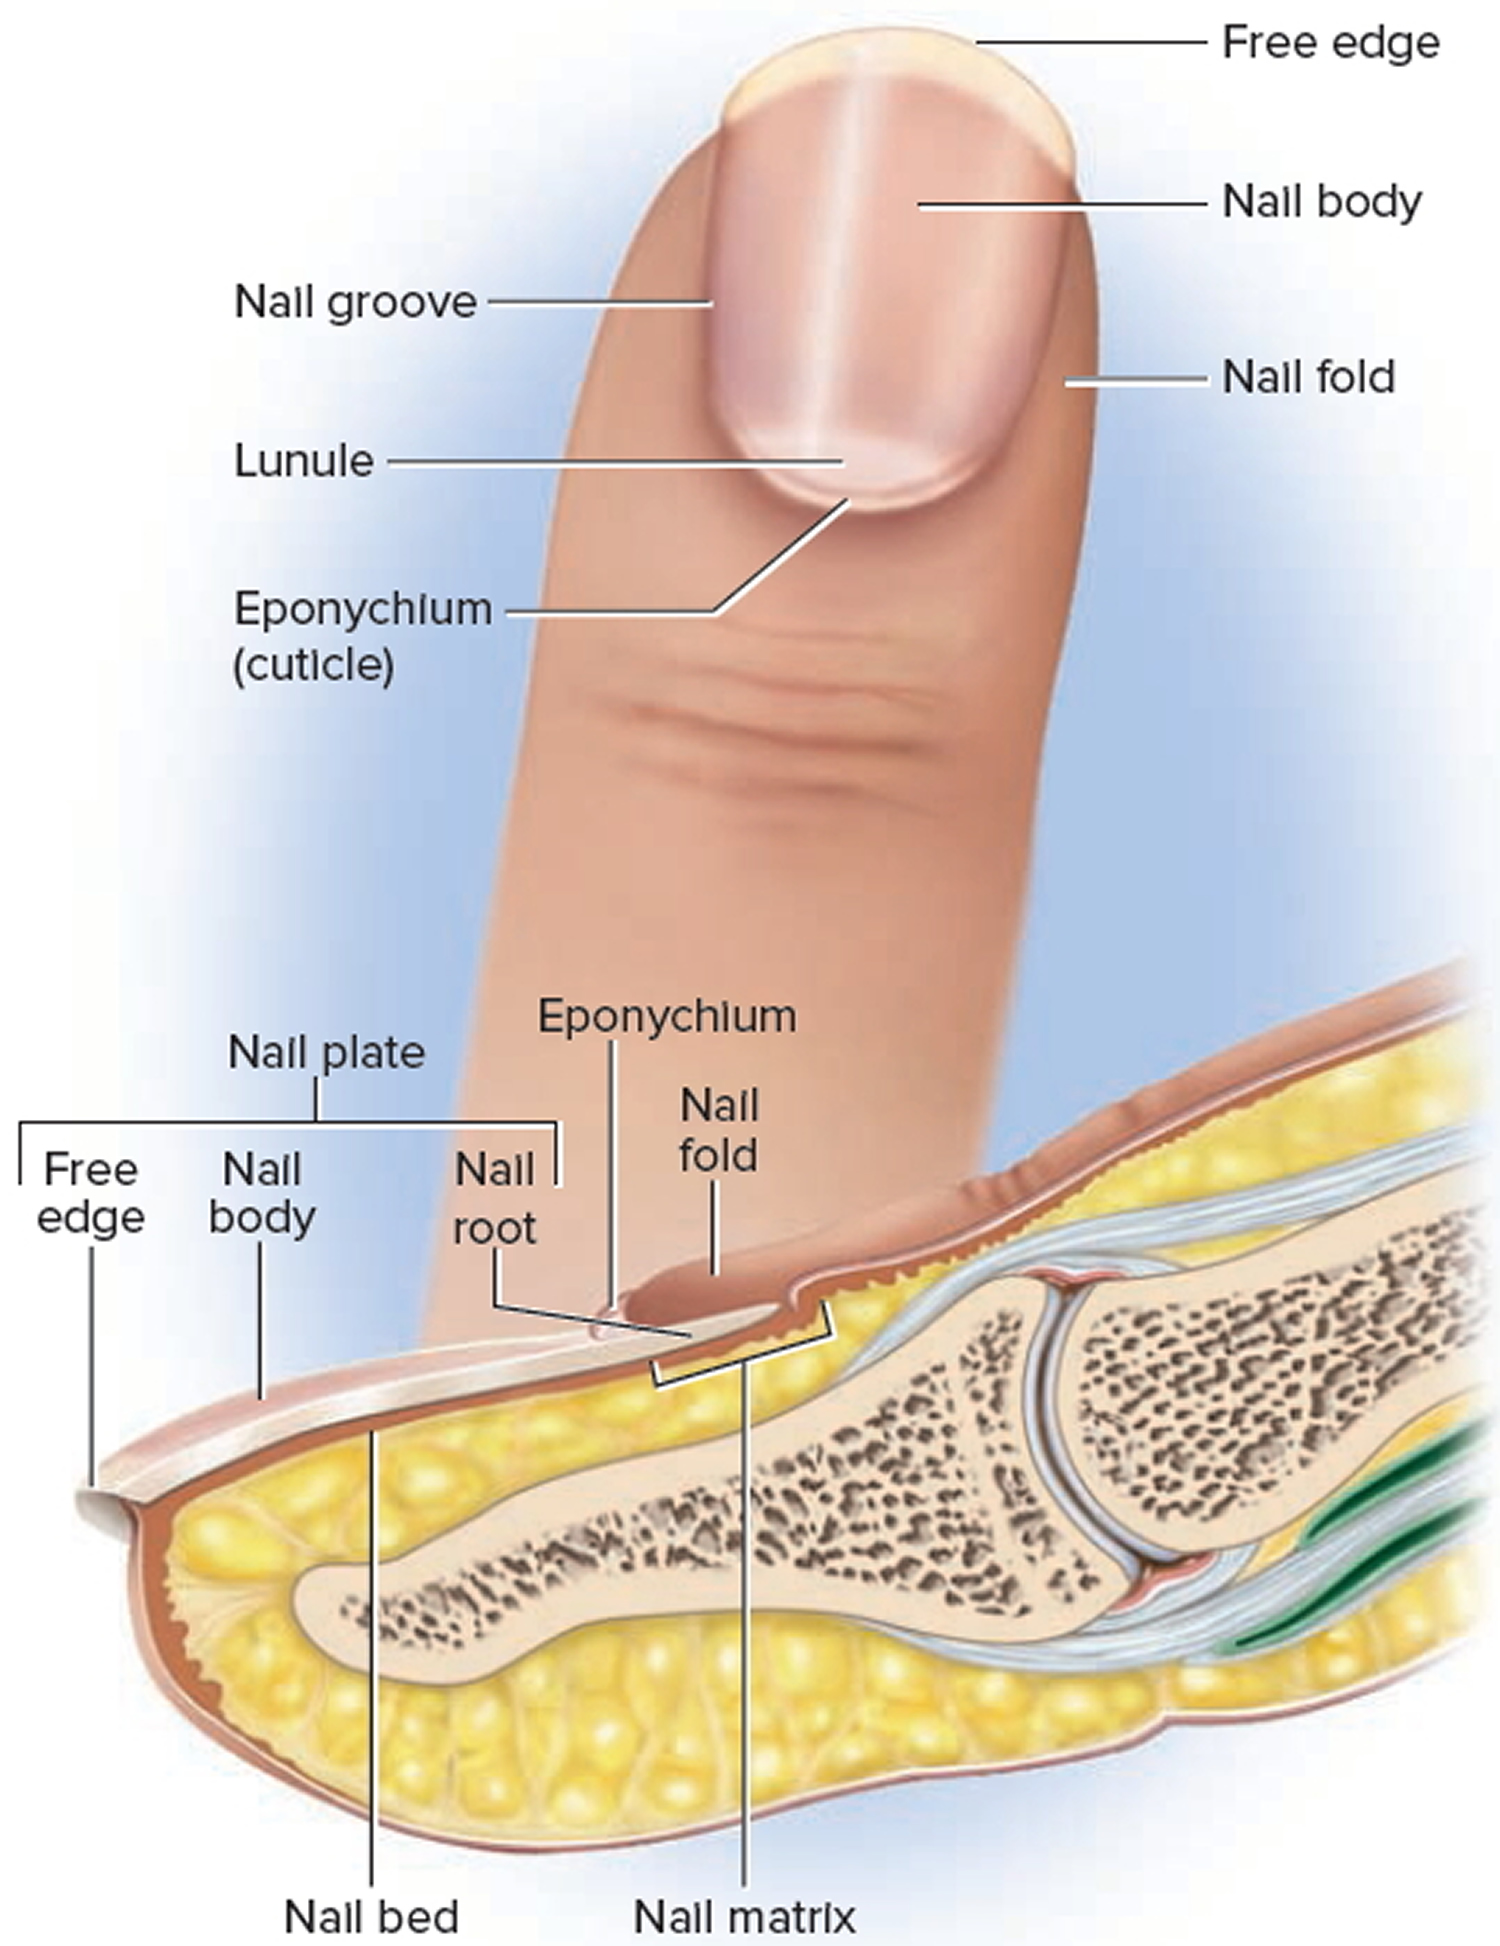 nail anatomy